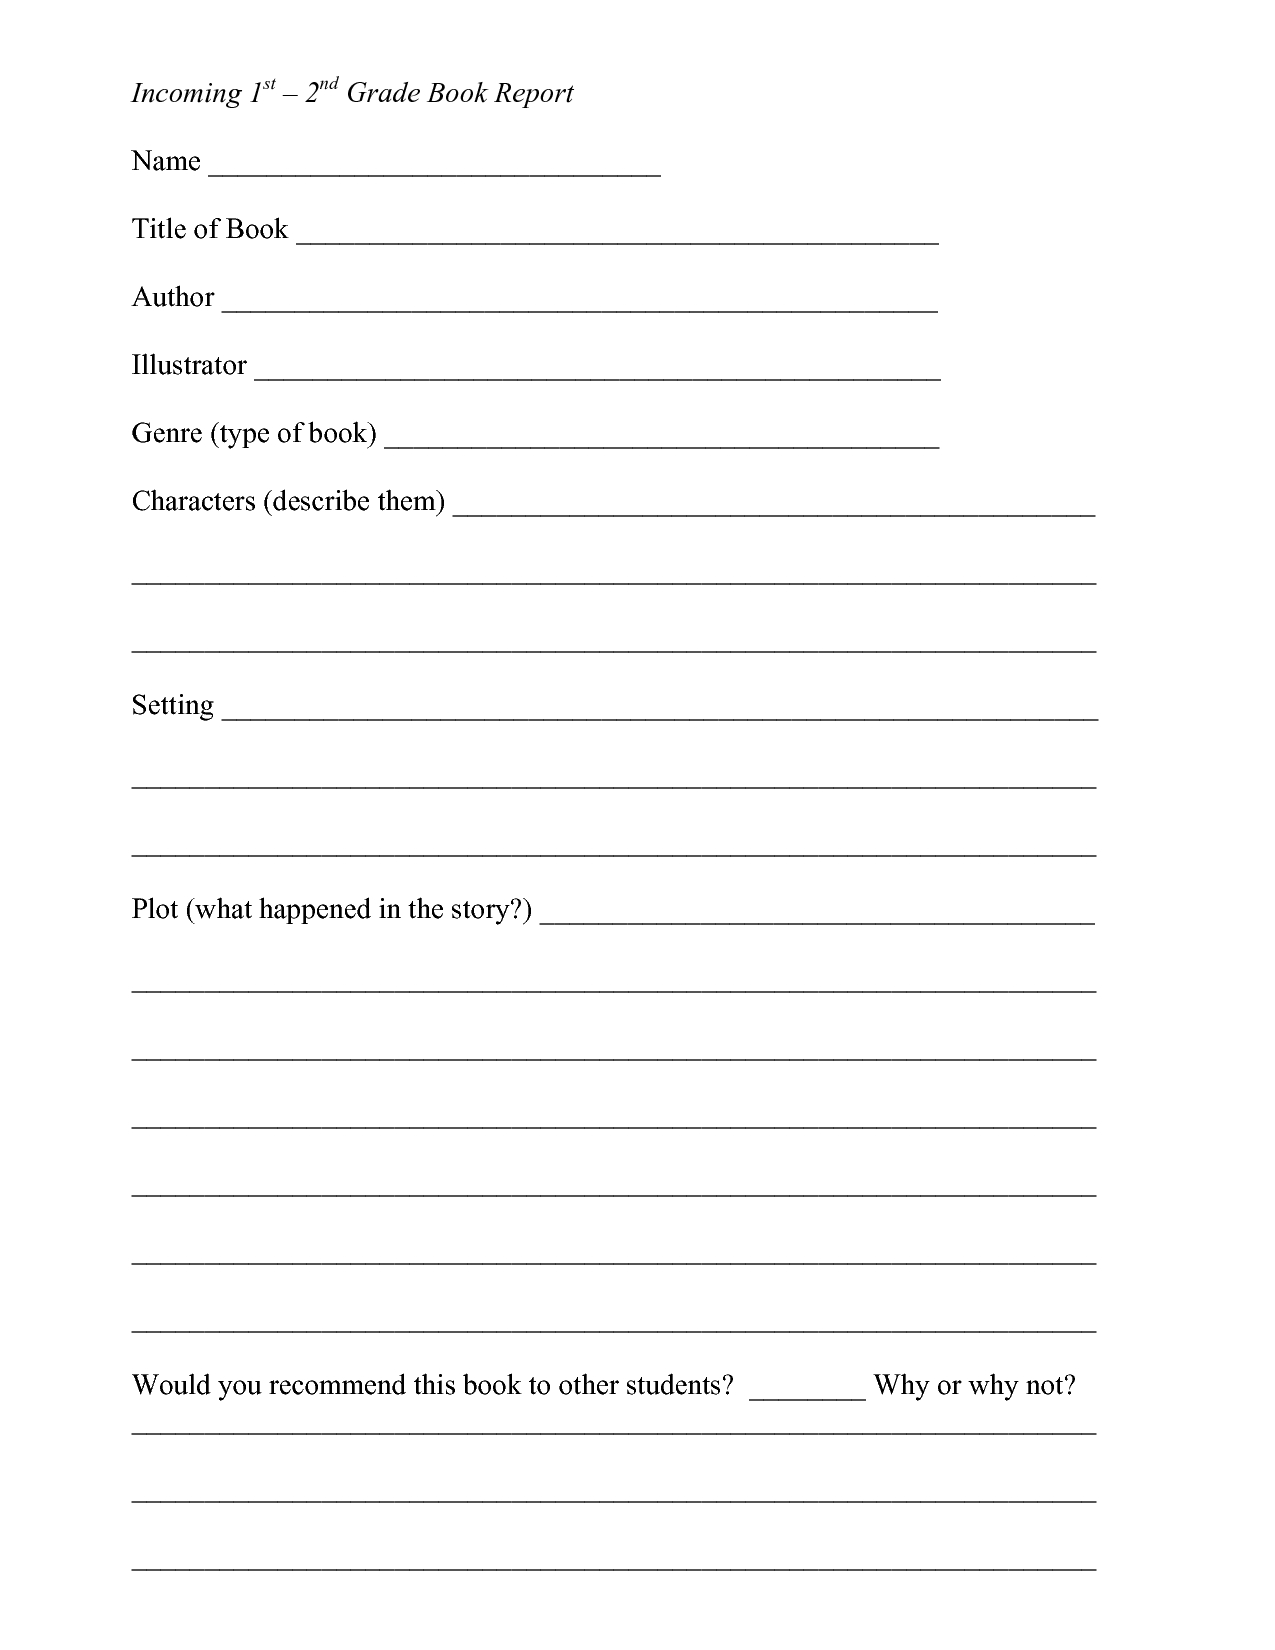 Book Report Template 2Nd Grade Free – Book Report Form With 4Th Grade Book Report Template